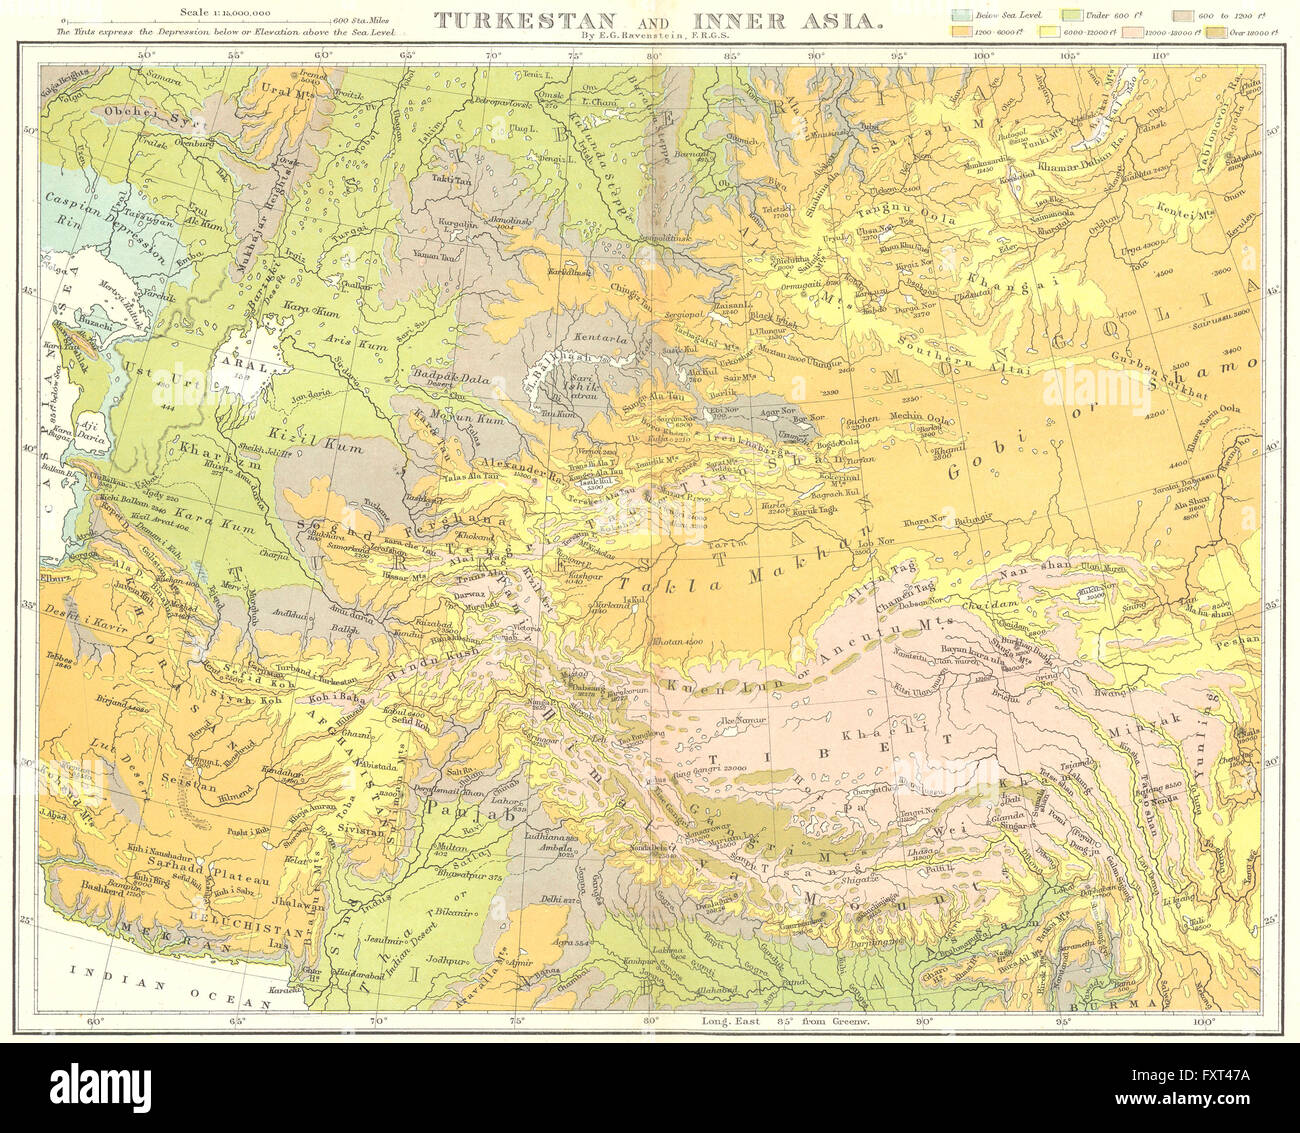 CENTRAL ASIA: Turkestan & Inner, c1885 antique map Stock Photo